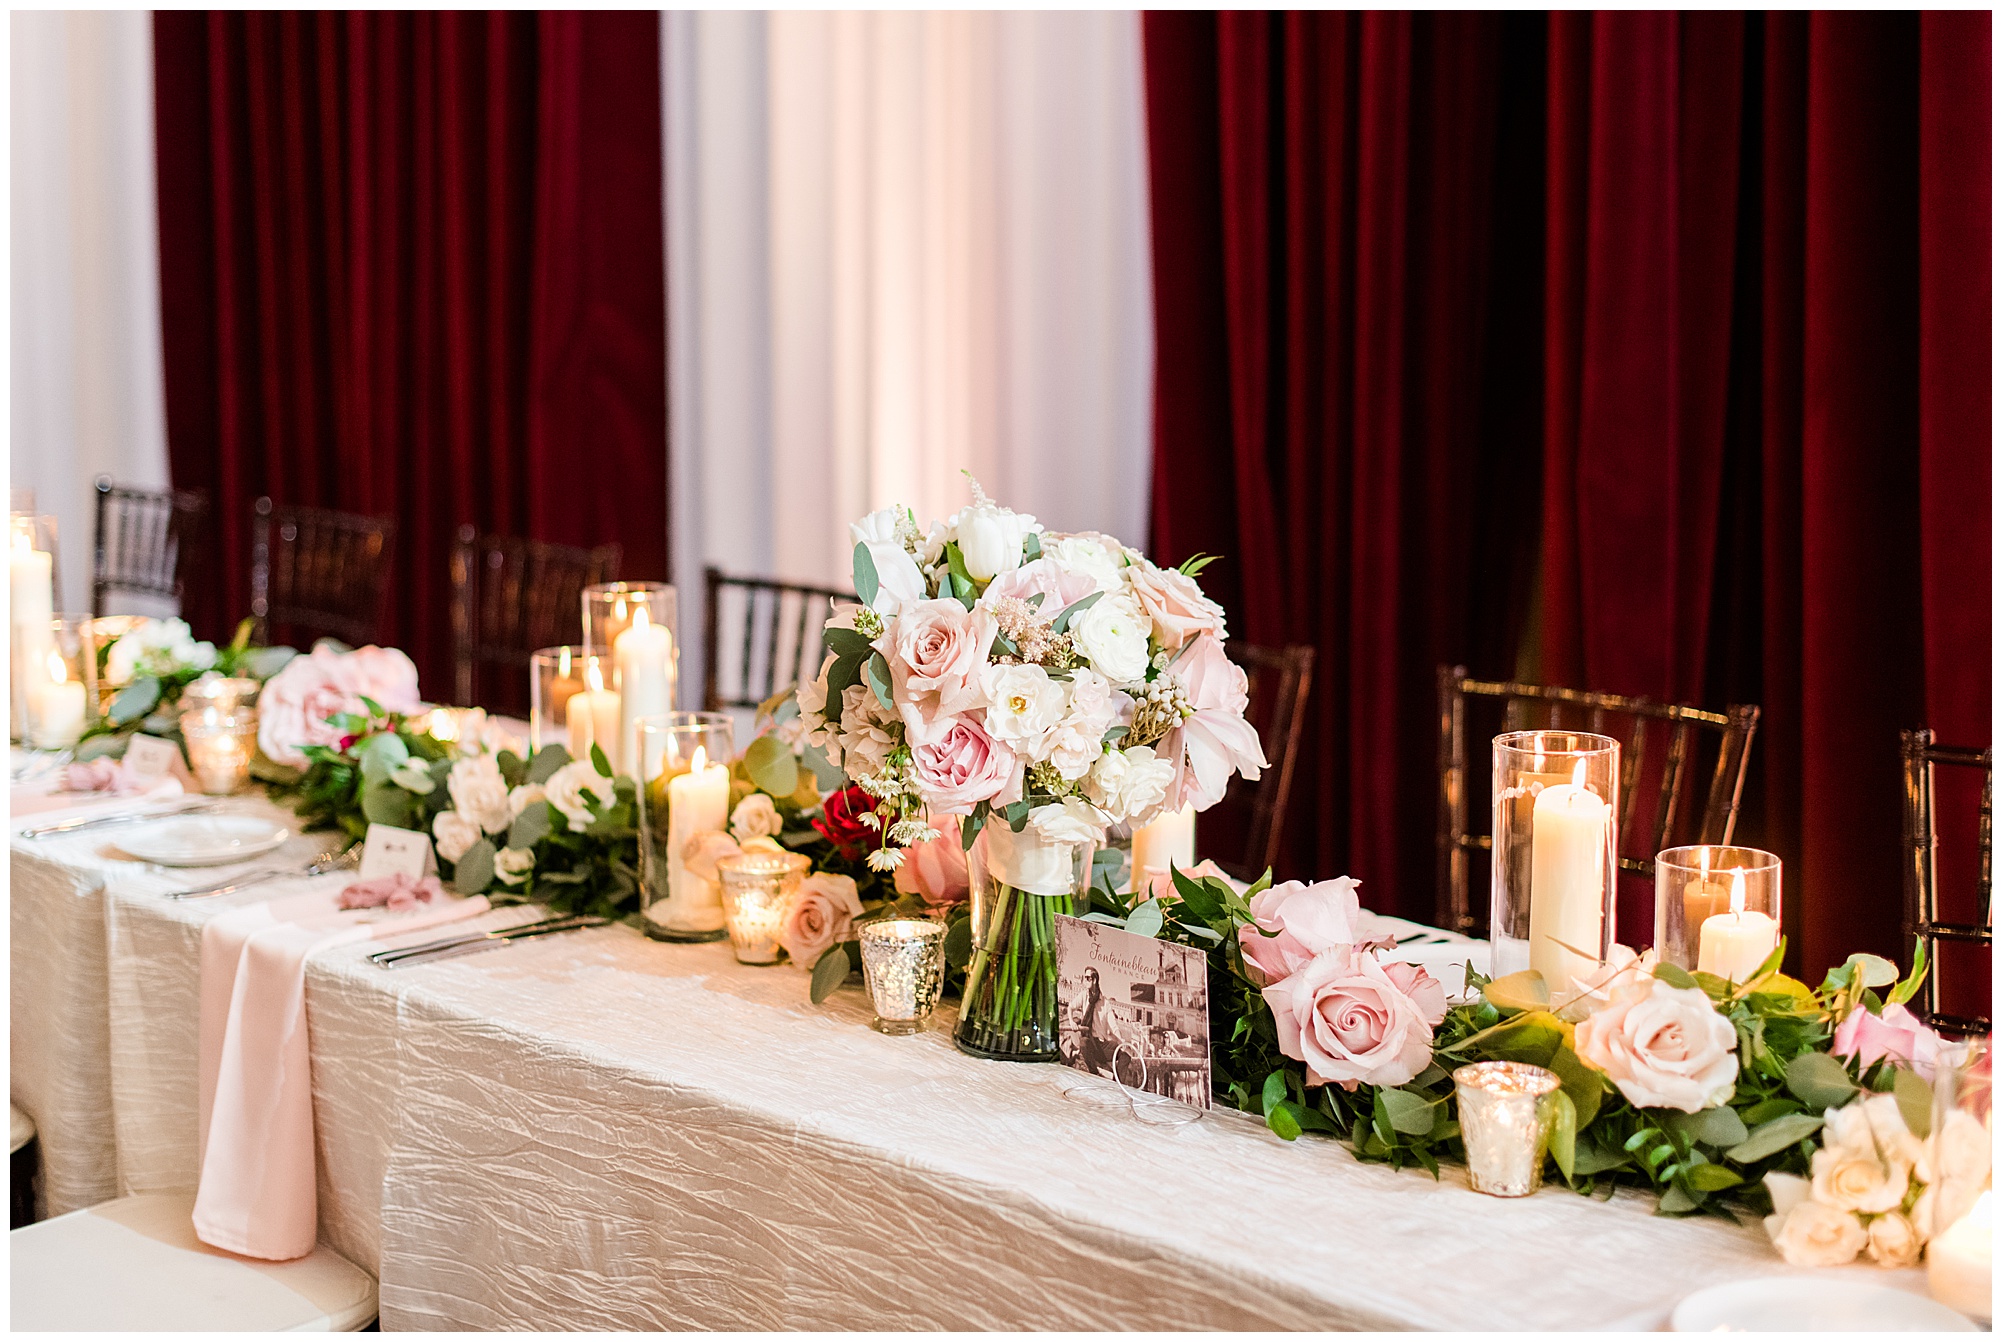 fairytale wedding theme. disney wedding theme. pink and cream. banquet table. by rva wedding photographer, sarah & dave photography.